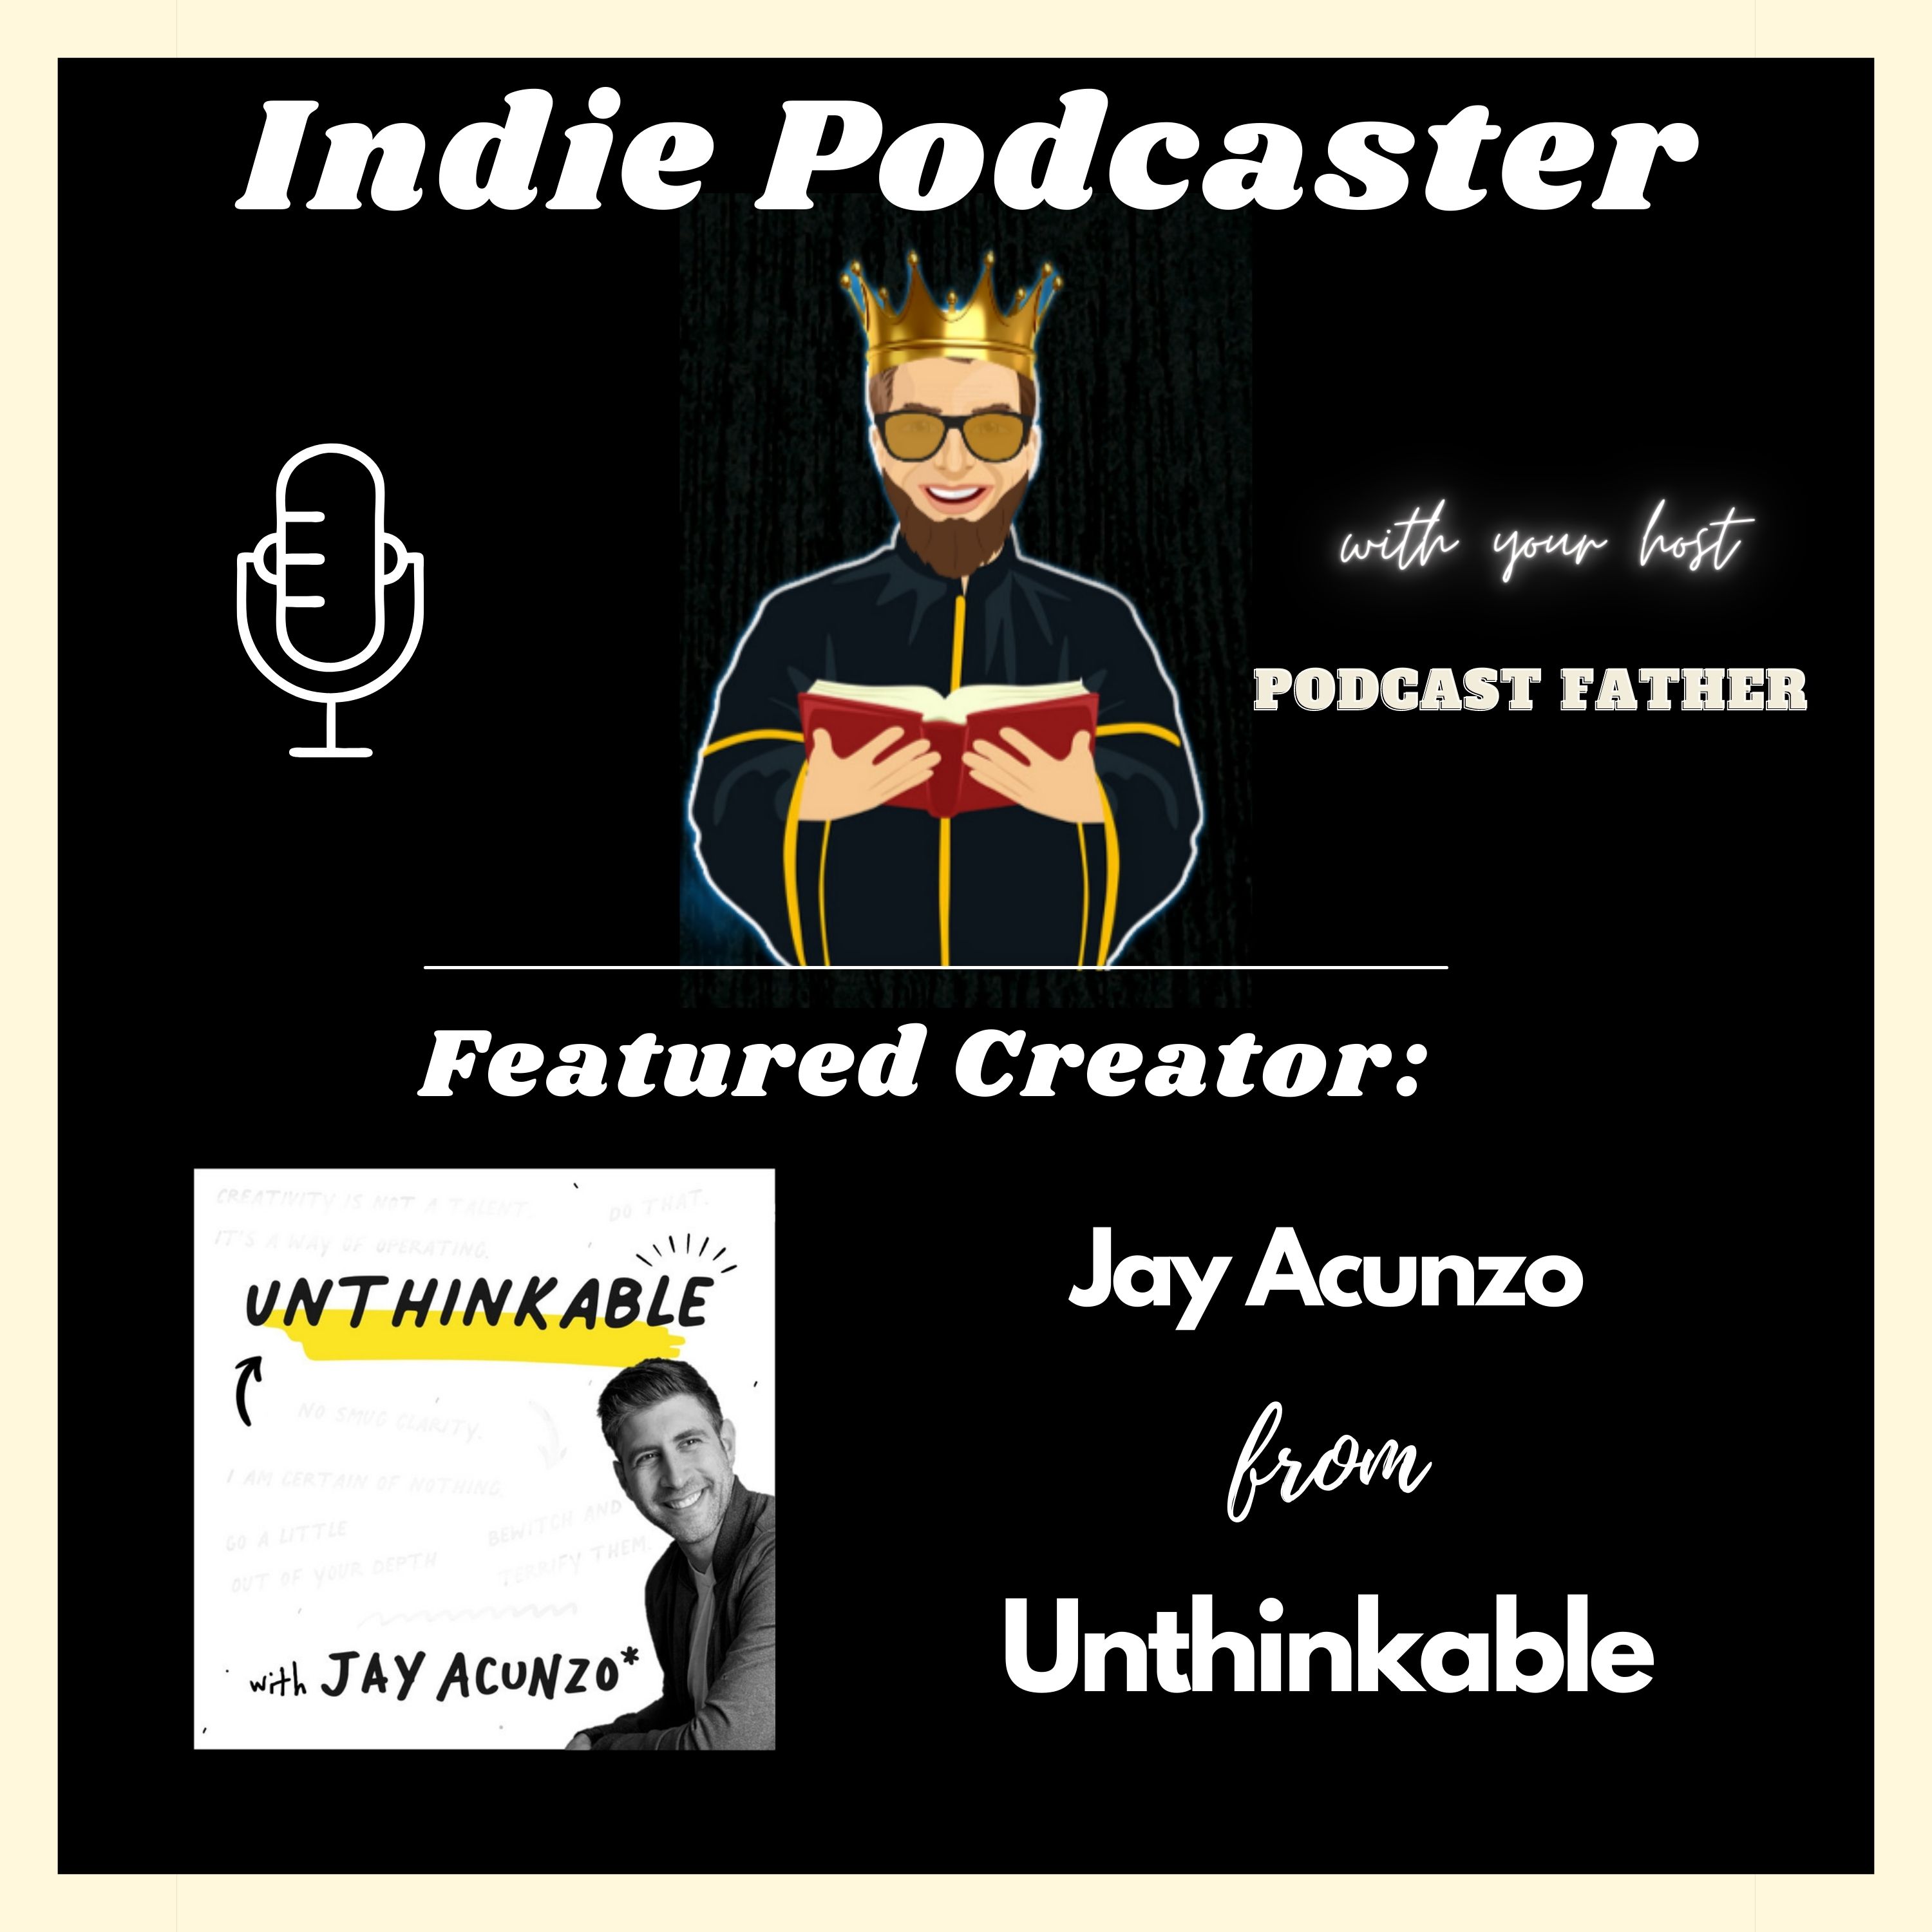 Jay Acunzo from Unthinkable podcast Image